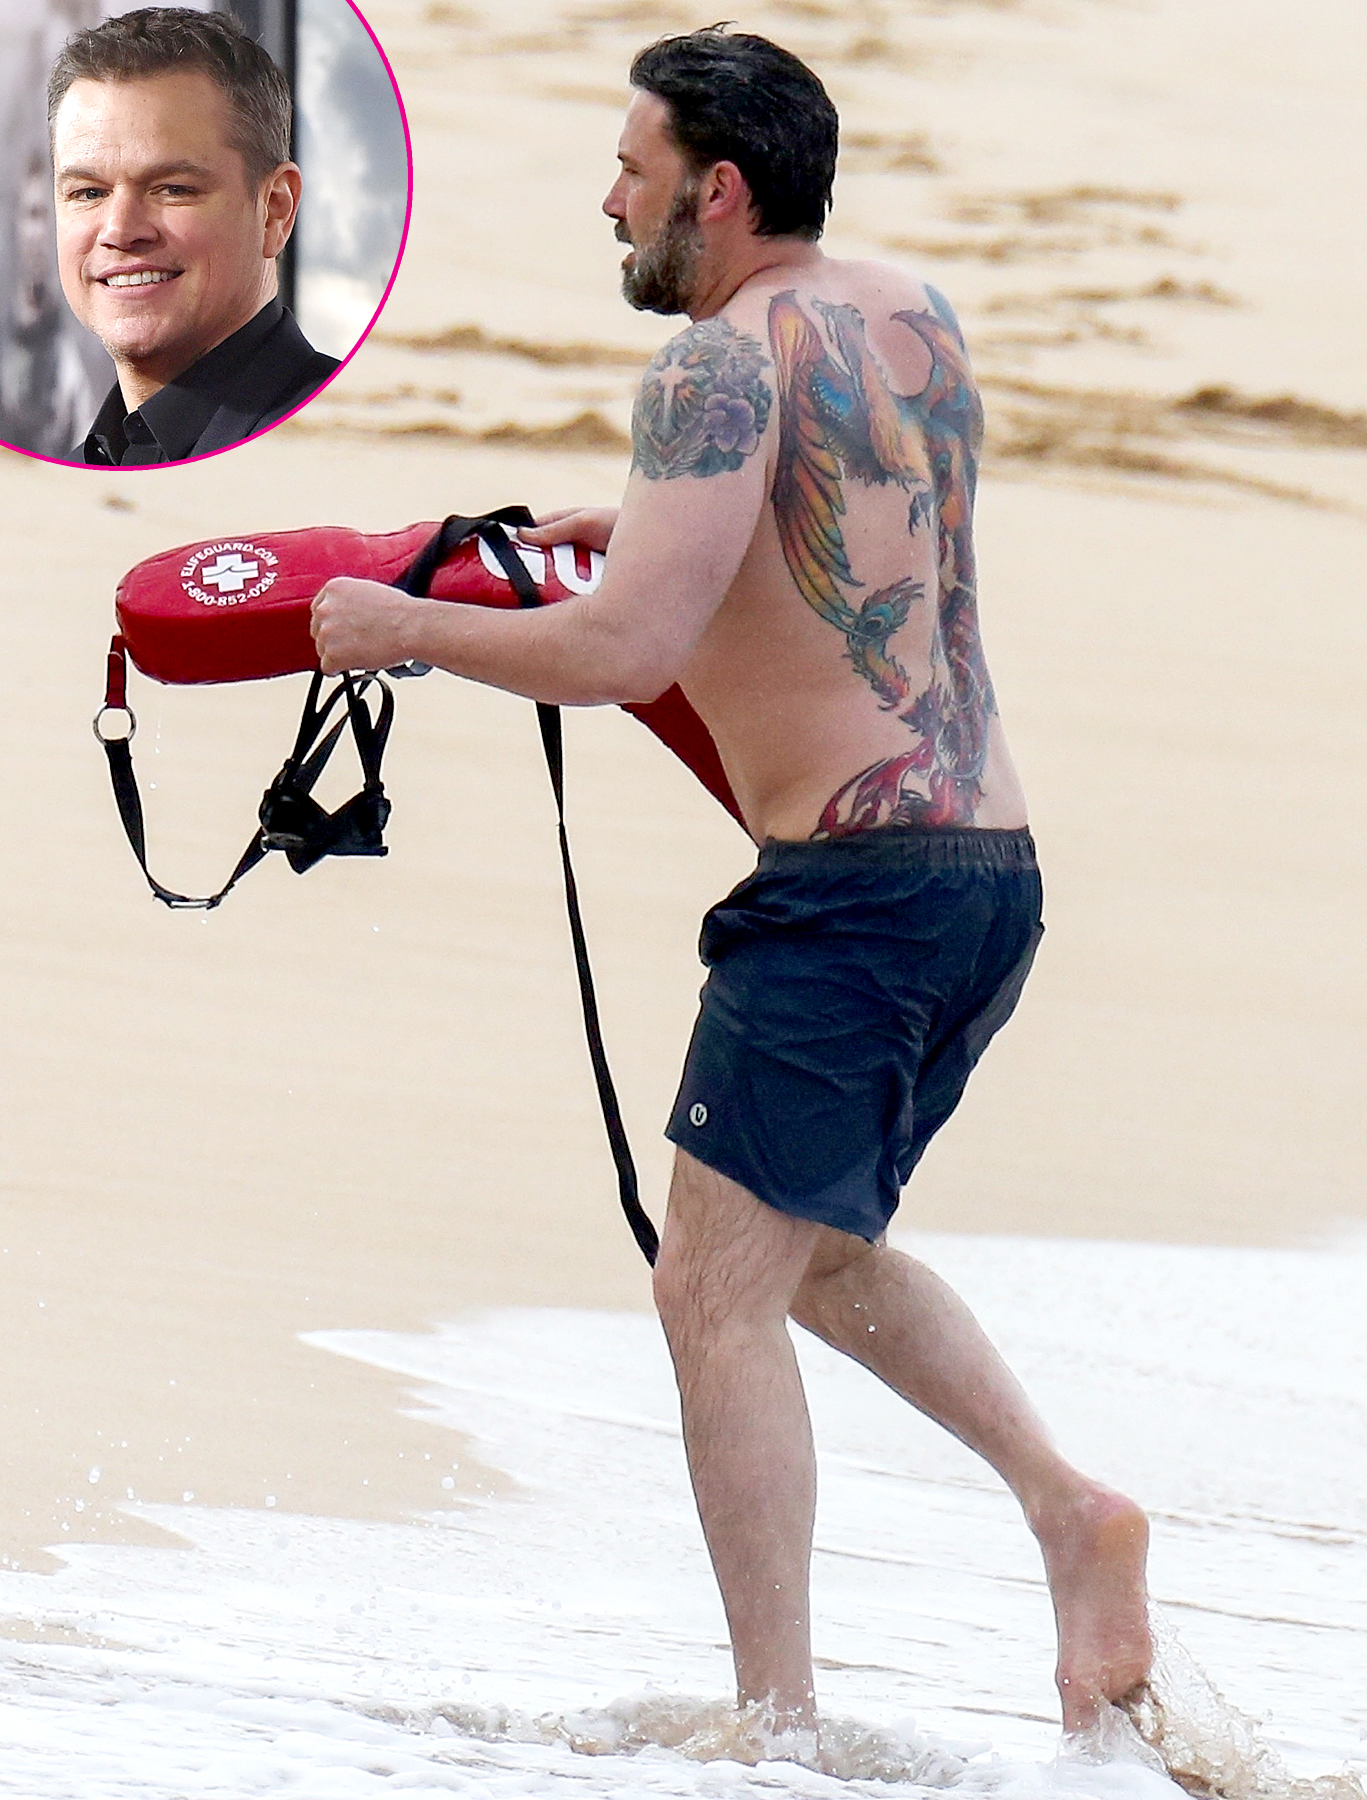 Matt Damon Reacts to Ben Afflecks Massive Back Tattoo